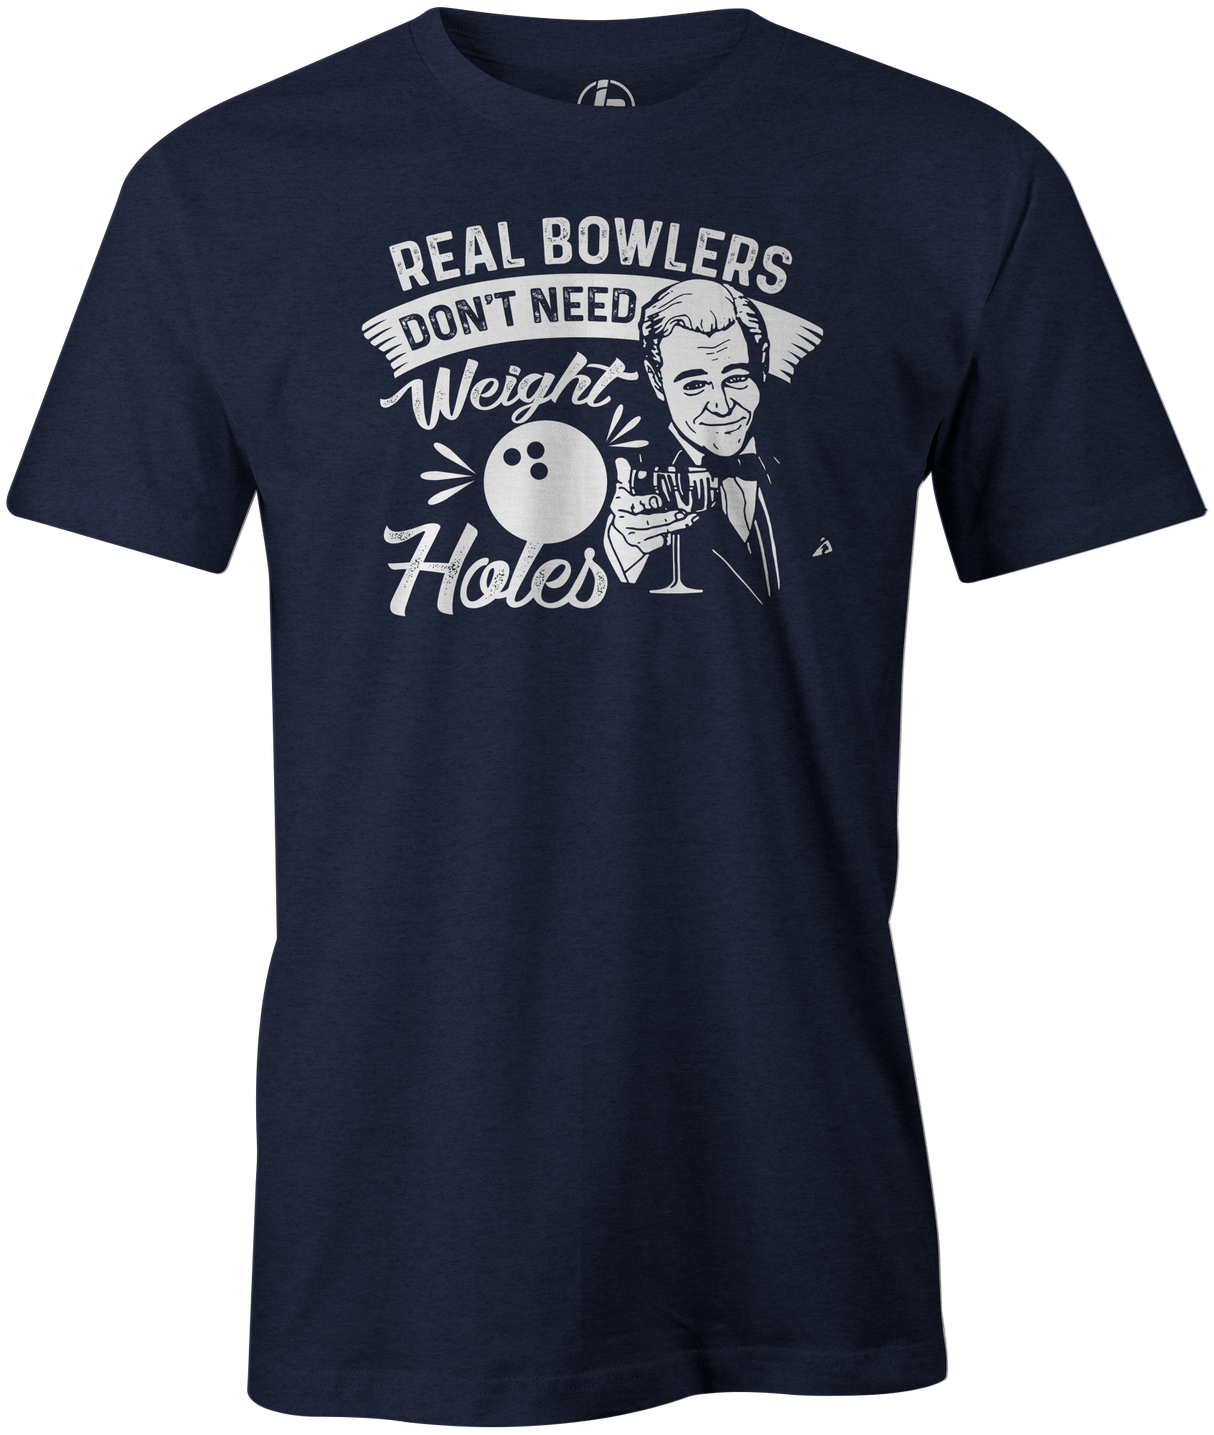 Real Bowlers Don't Need Weight Holes Men's T-shirt, Navy, Tee, tee-shirt, tshirt, tee shirt, funny, novelty, bowling